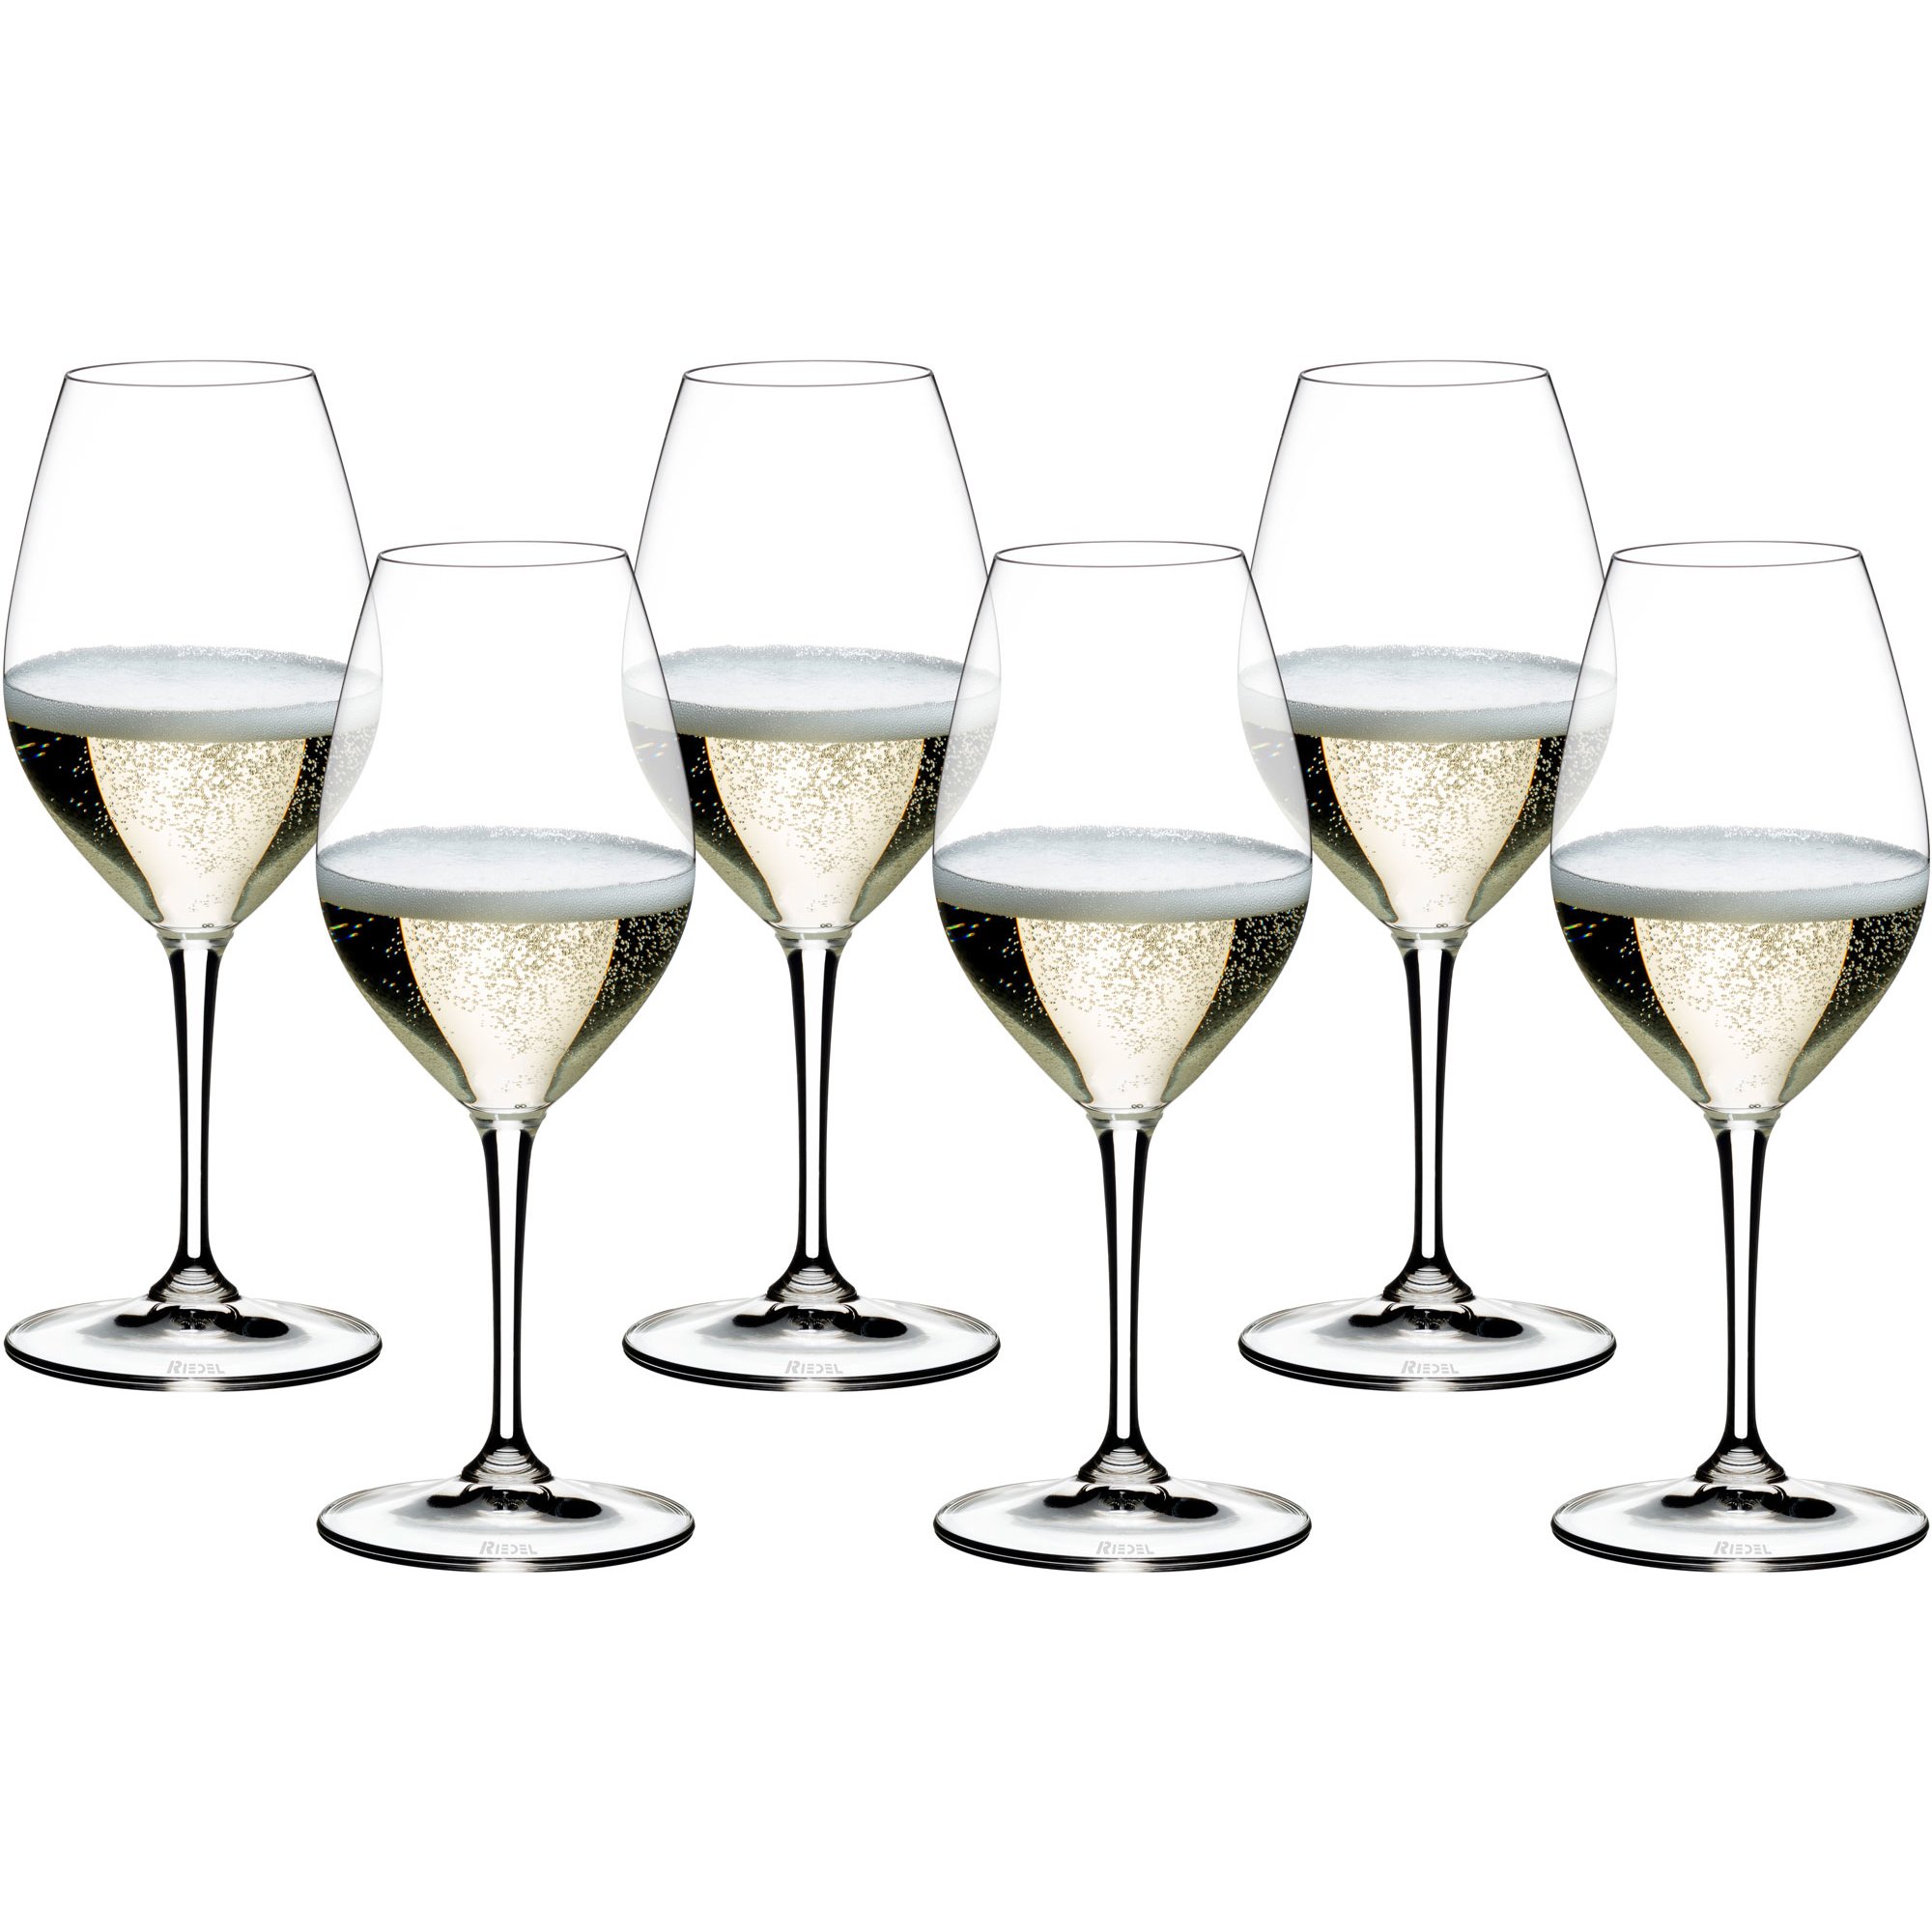 Riedel Vinum champagneglas 6 stk. 265-års jubilæum